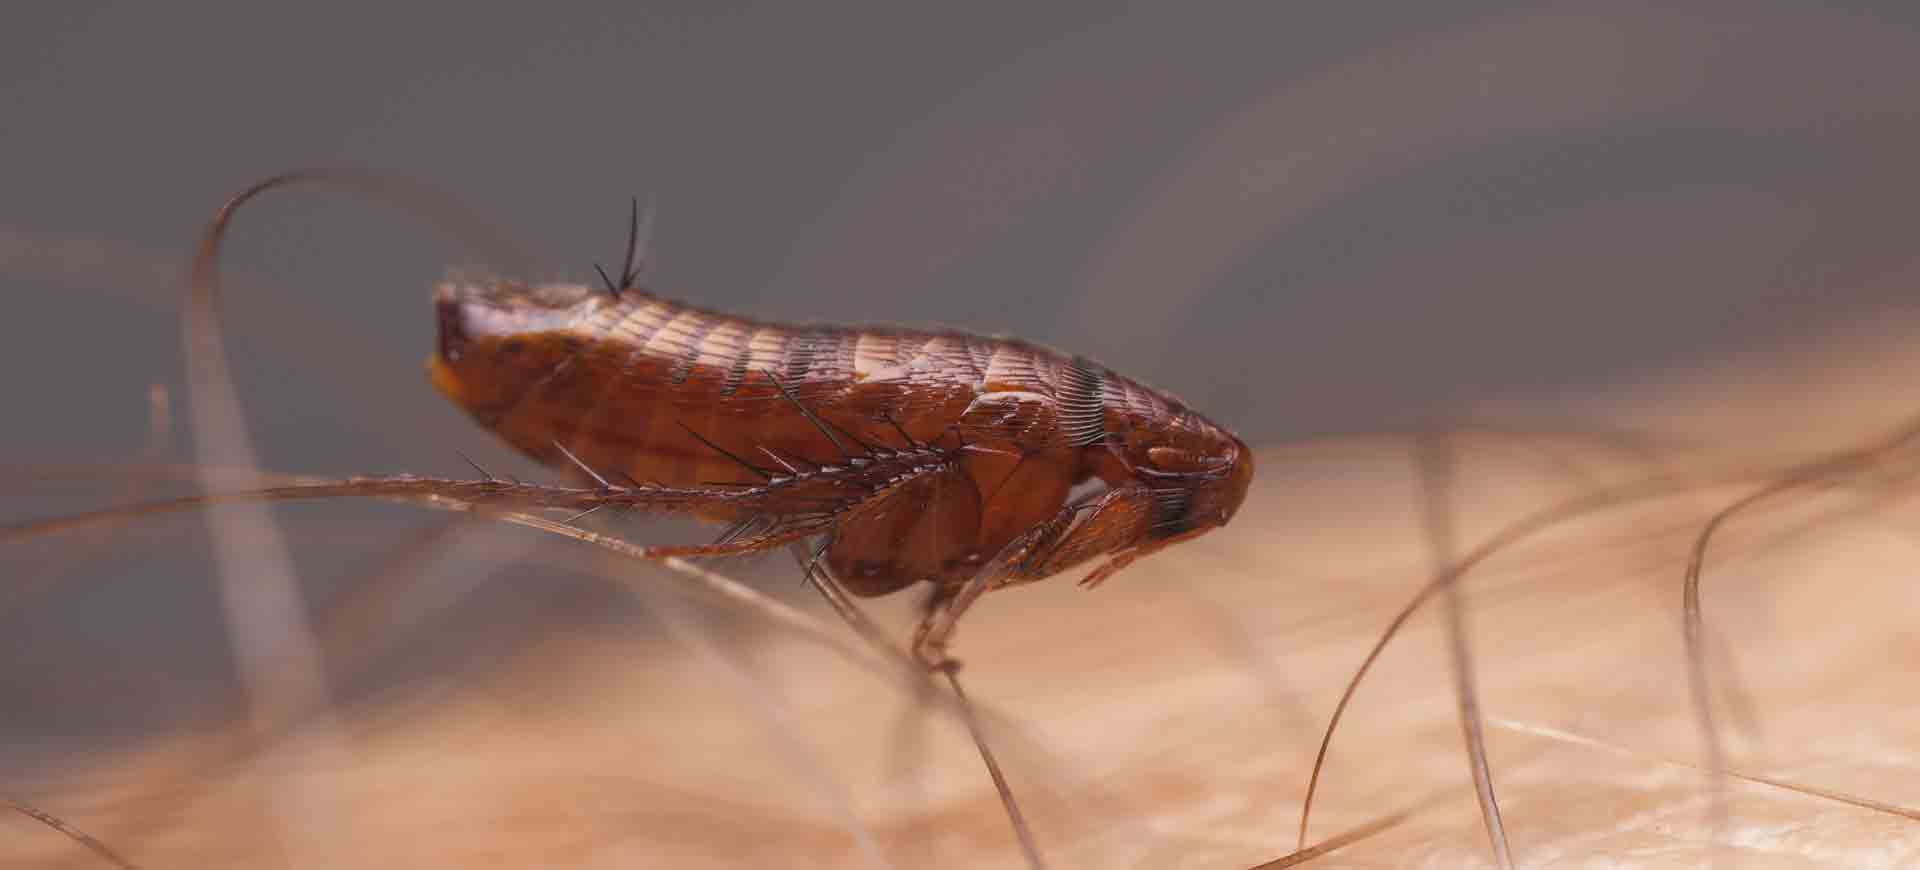 flea pest control scripps ranch